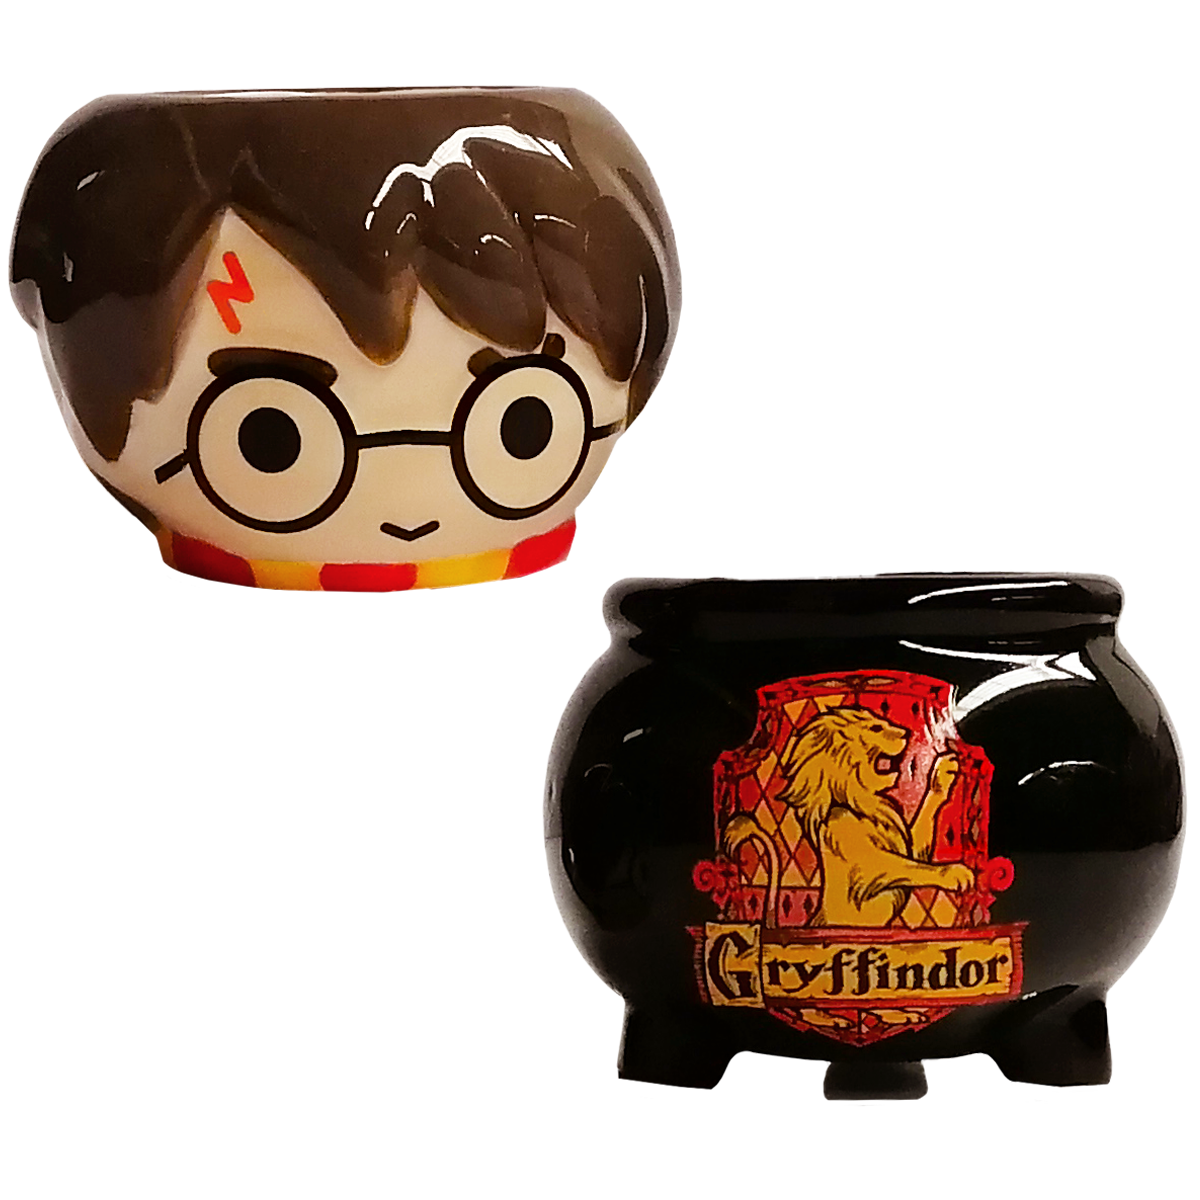 Set 2 Mini tazas dúo coleccionable Harry Potter y Caldero de cerámica